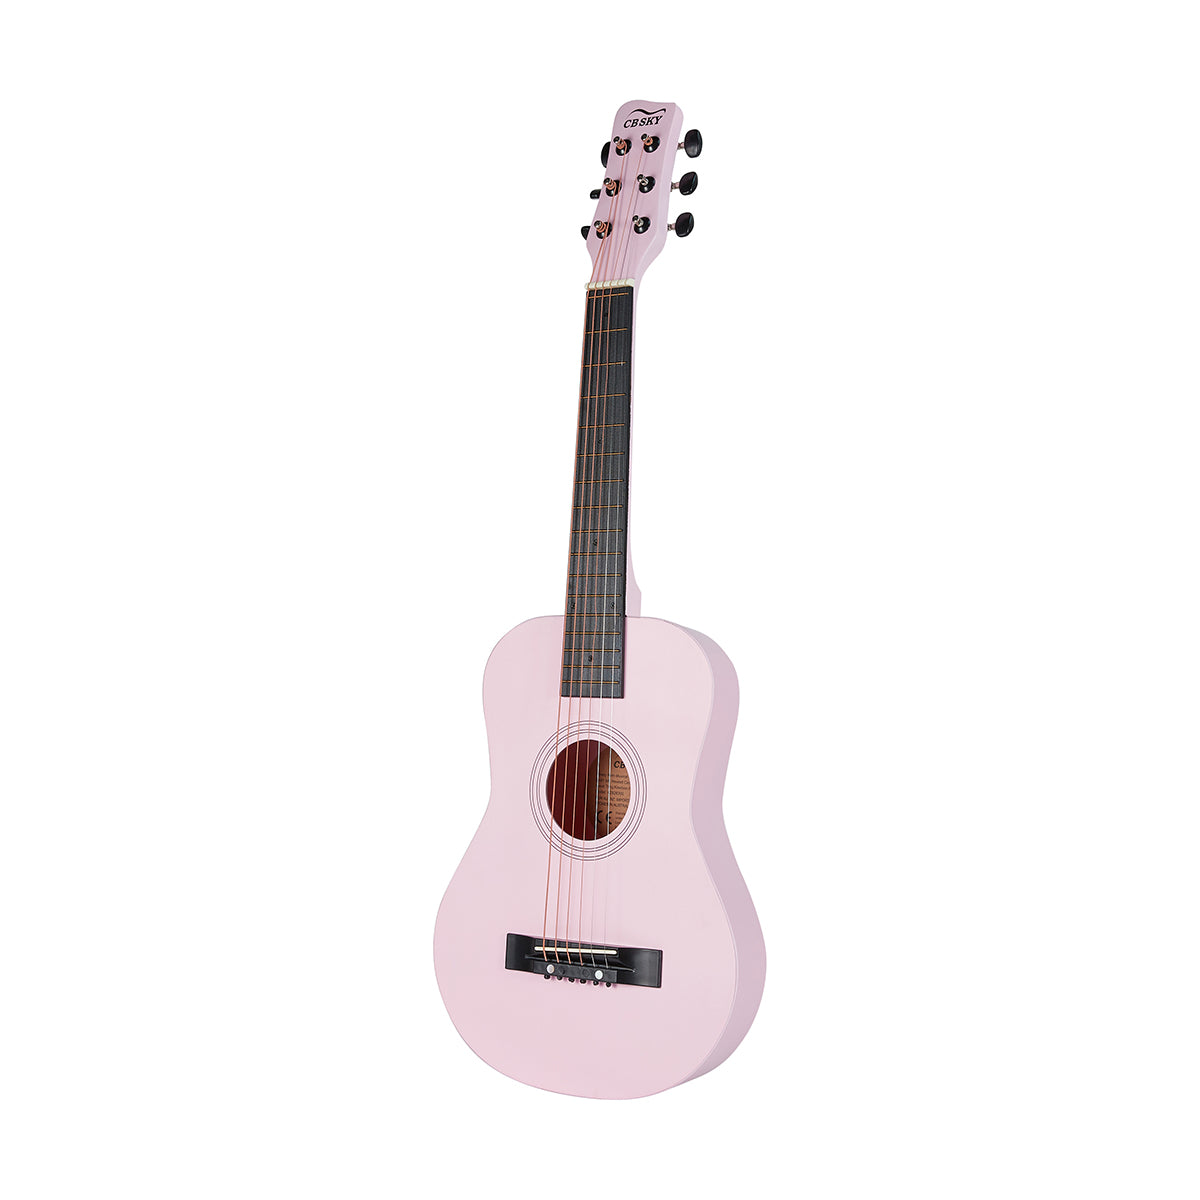 CB SKY 76cm Acoustic Guitar – TheITmart